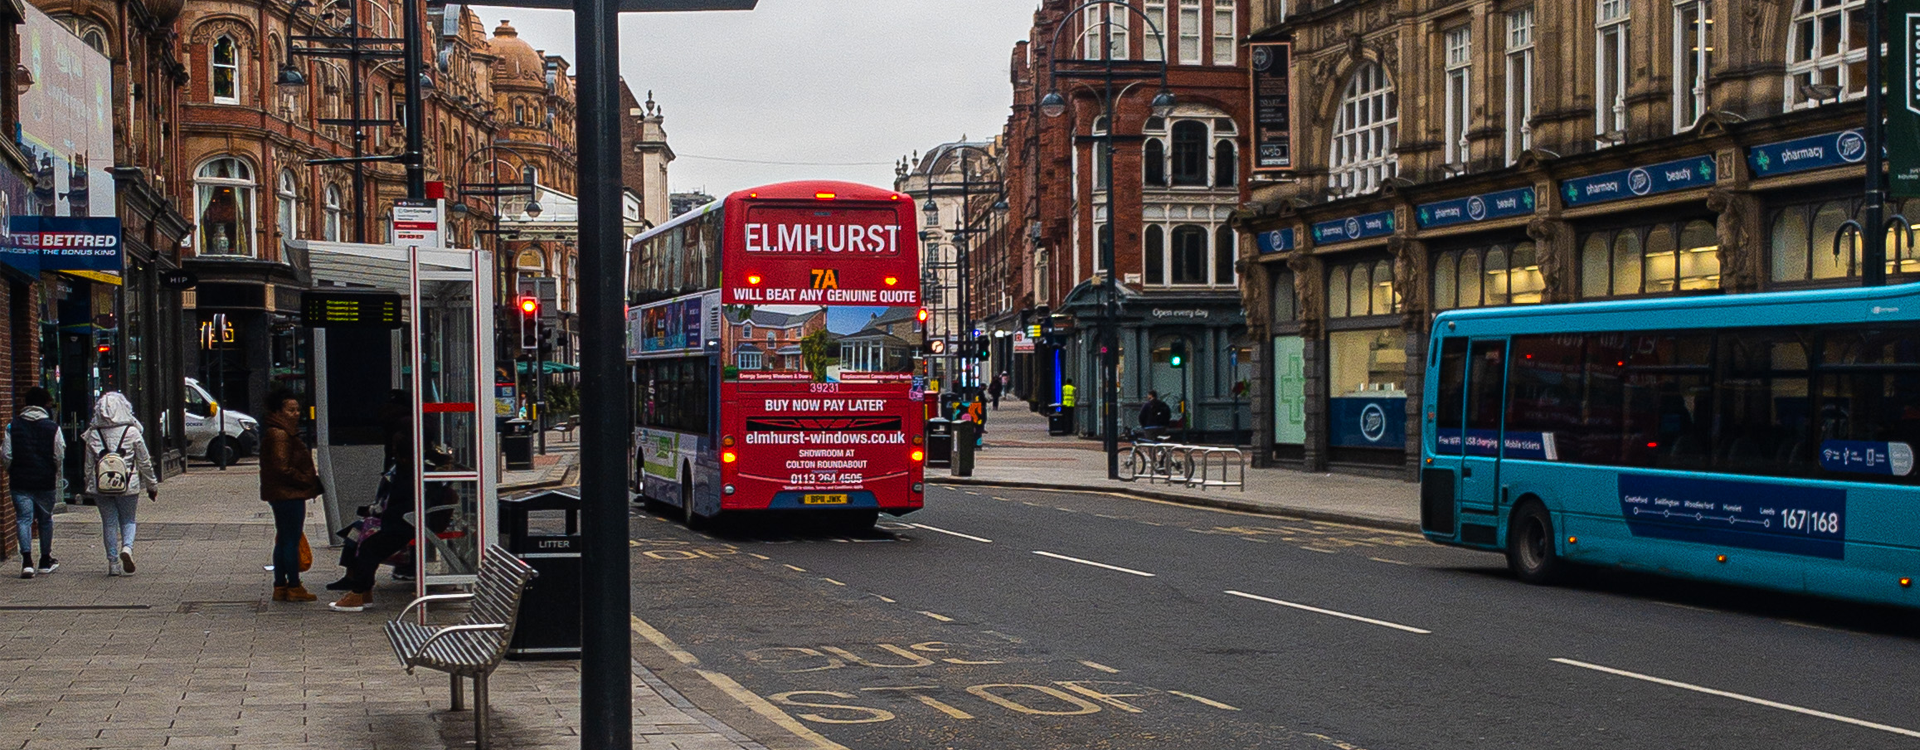 Elmhurst Windows: Boosting Brand Awareness with Bus Advertising